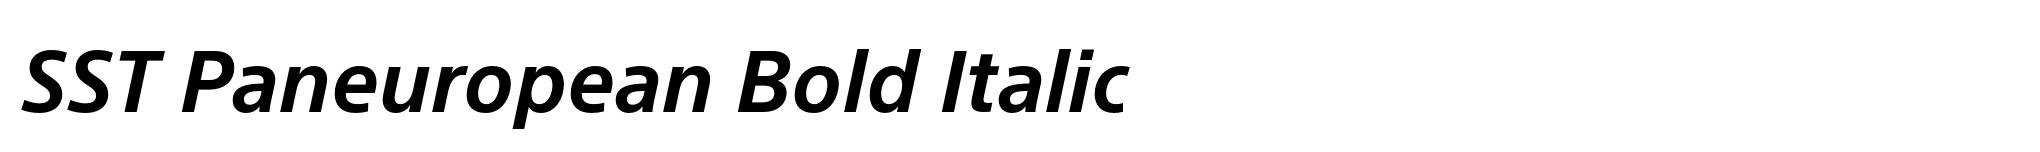 SST Paneuropean Bold Italic image